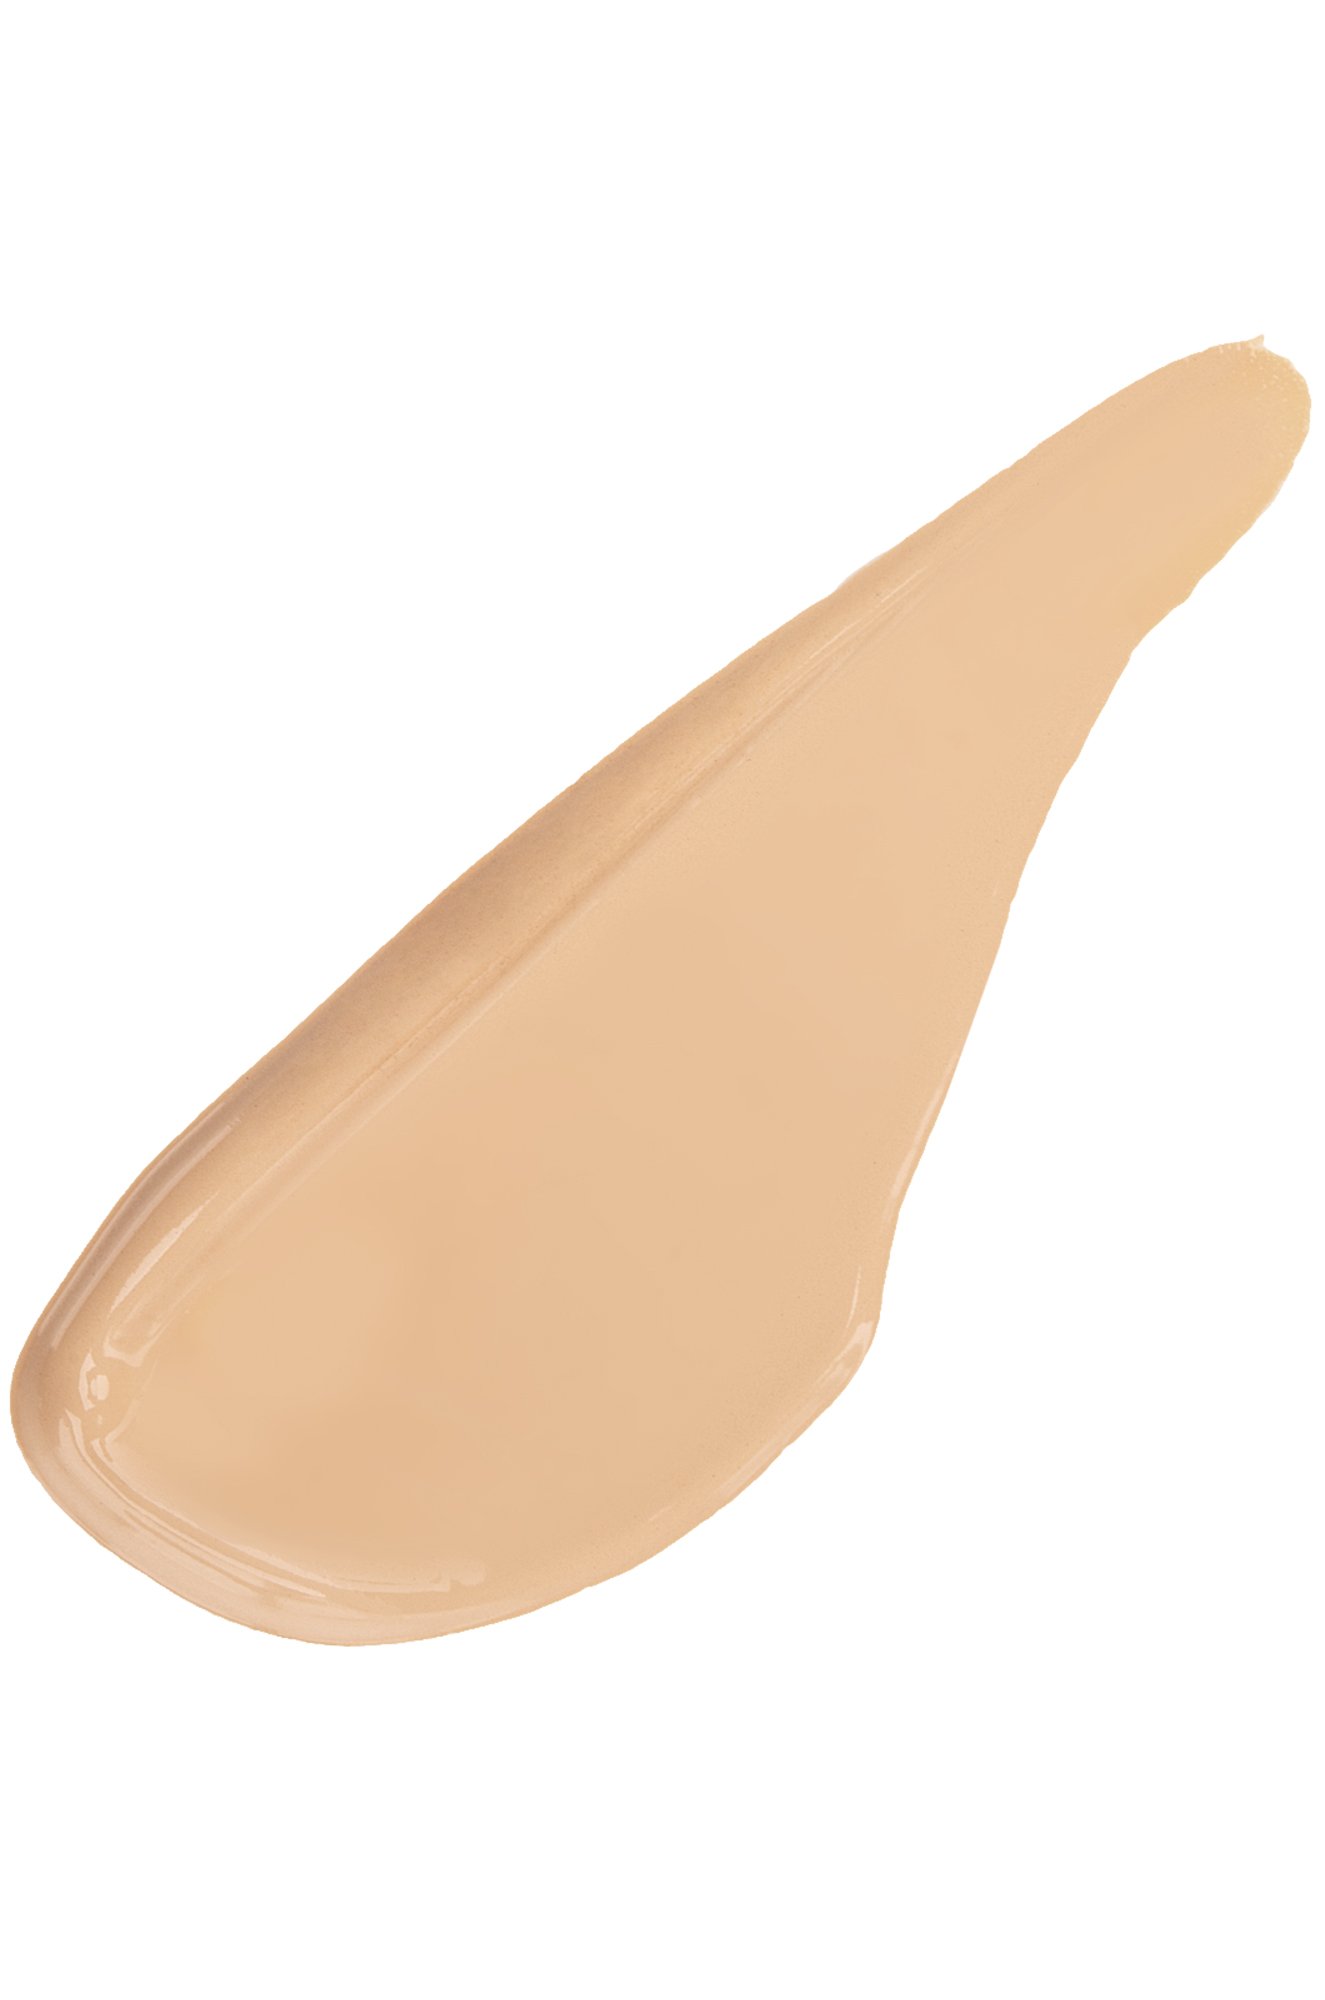 Тональный крем OhMy BB Cream т.402 natural beige 30 мл LAMEL Professional